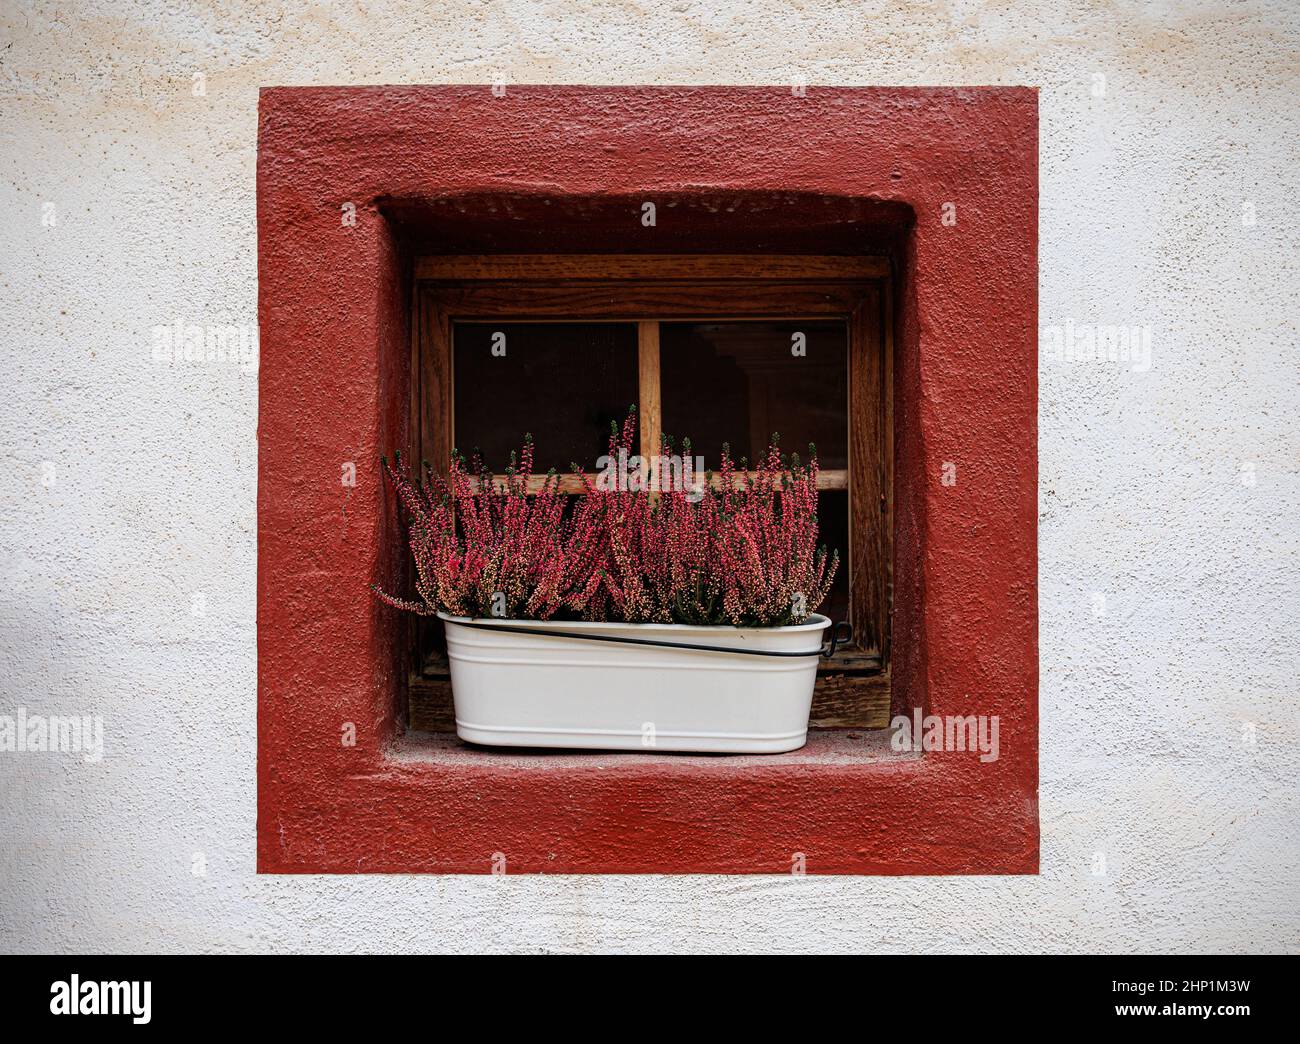 Blumentopf mit Heidekraut im Fenster Banque D'Images